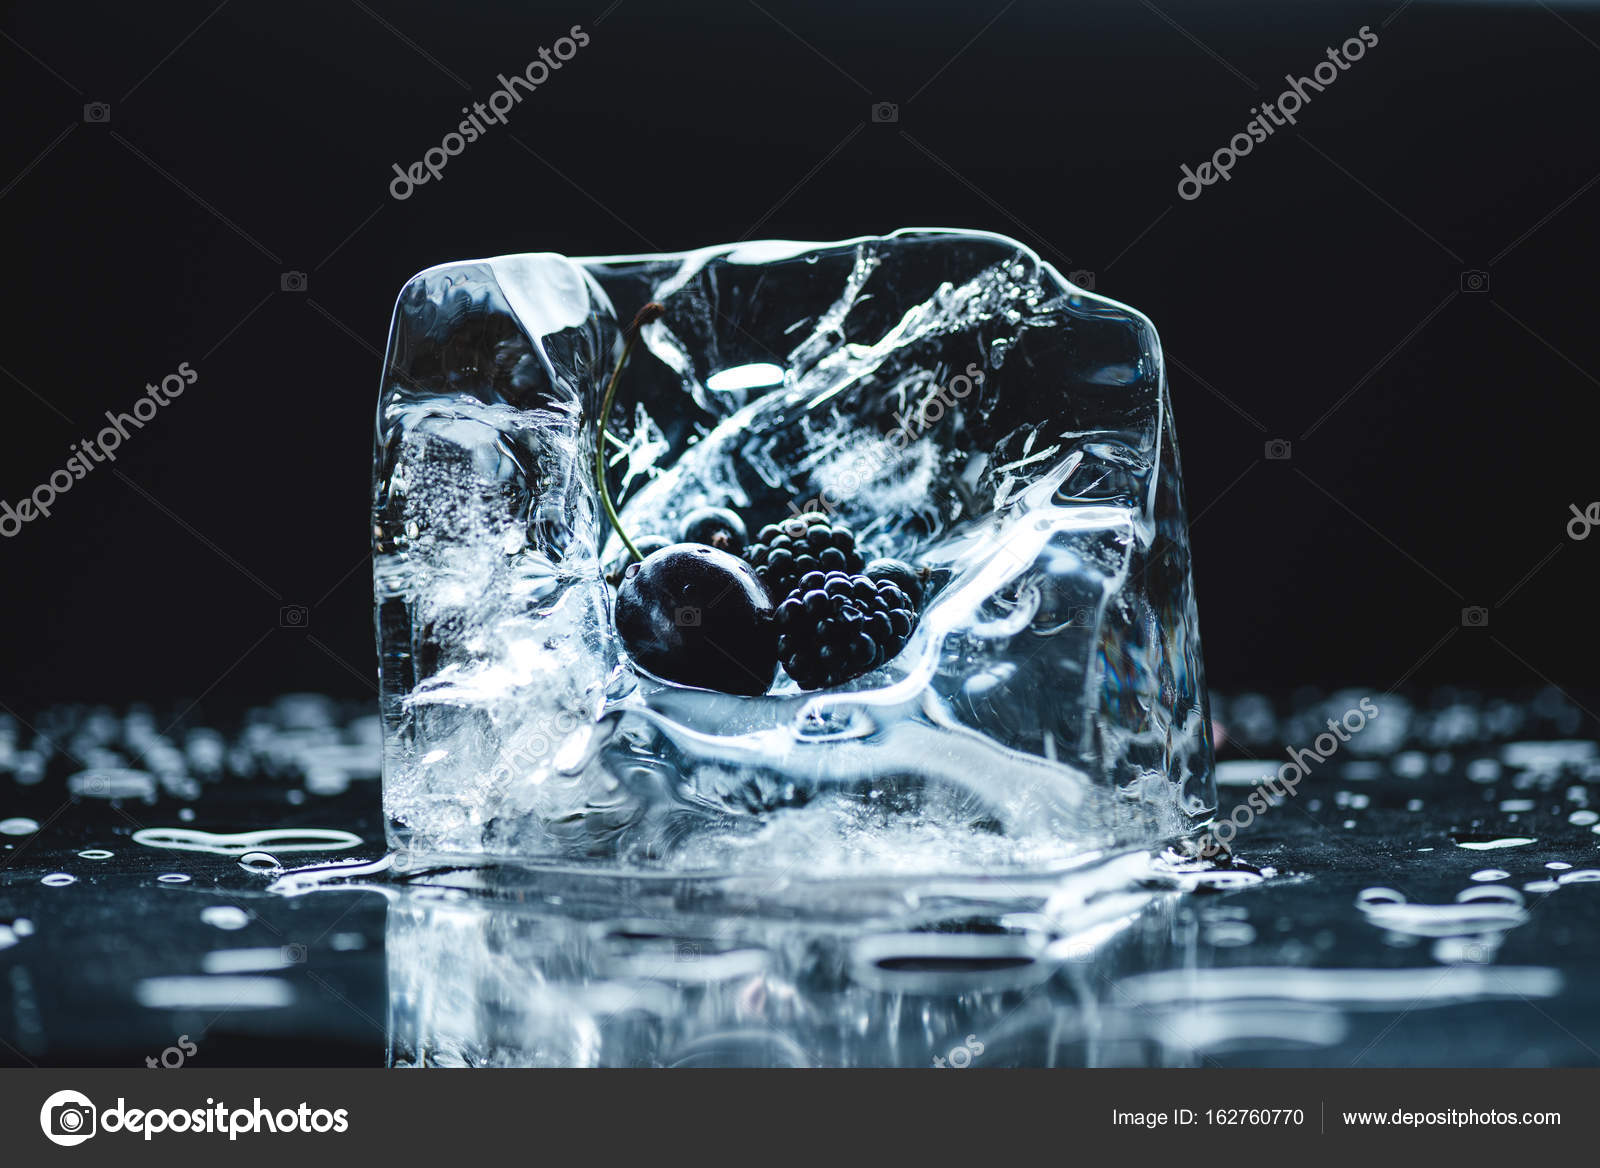 https://st3.depositphotos.com/13324256/16276/i/1600/depositphotos_162760770-stock-photo-frozen-berries-in-ice-cube.jpg